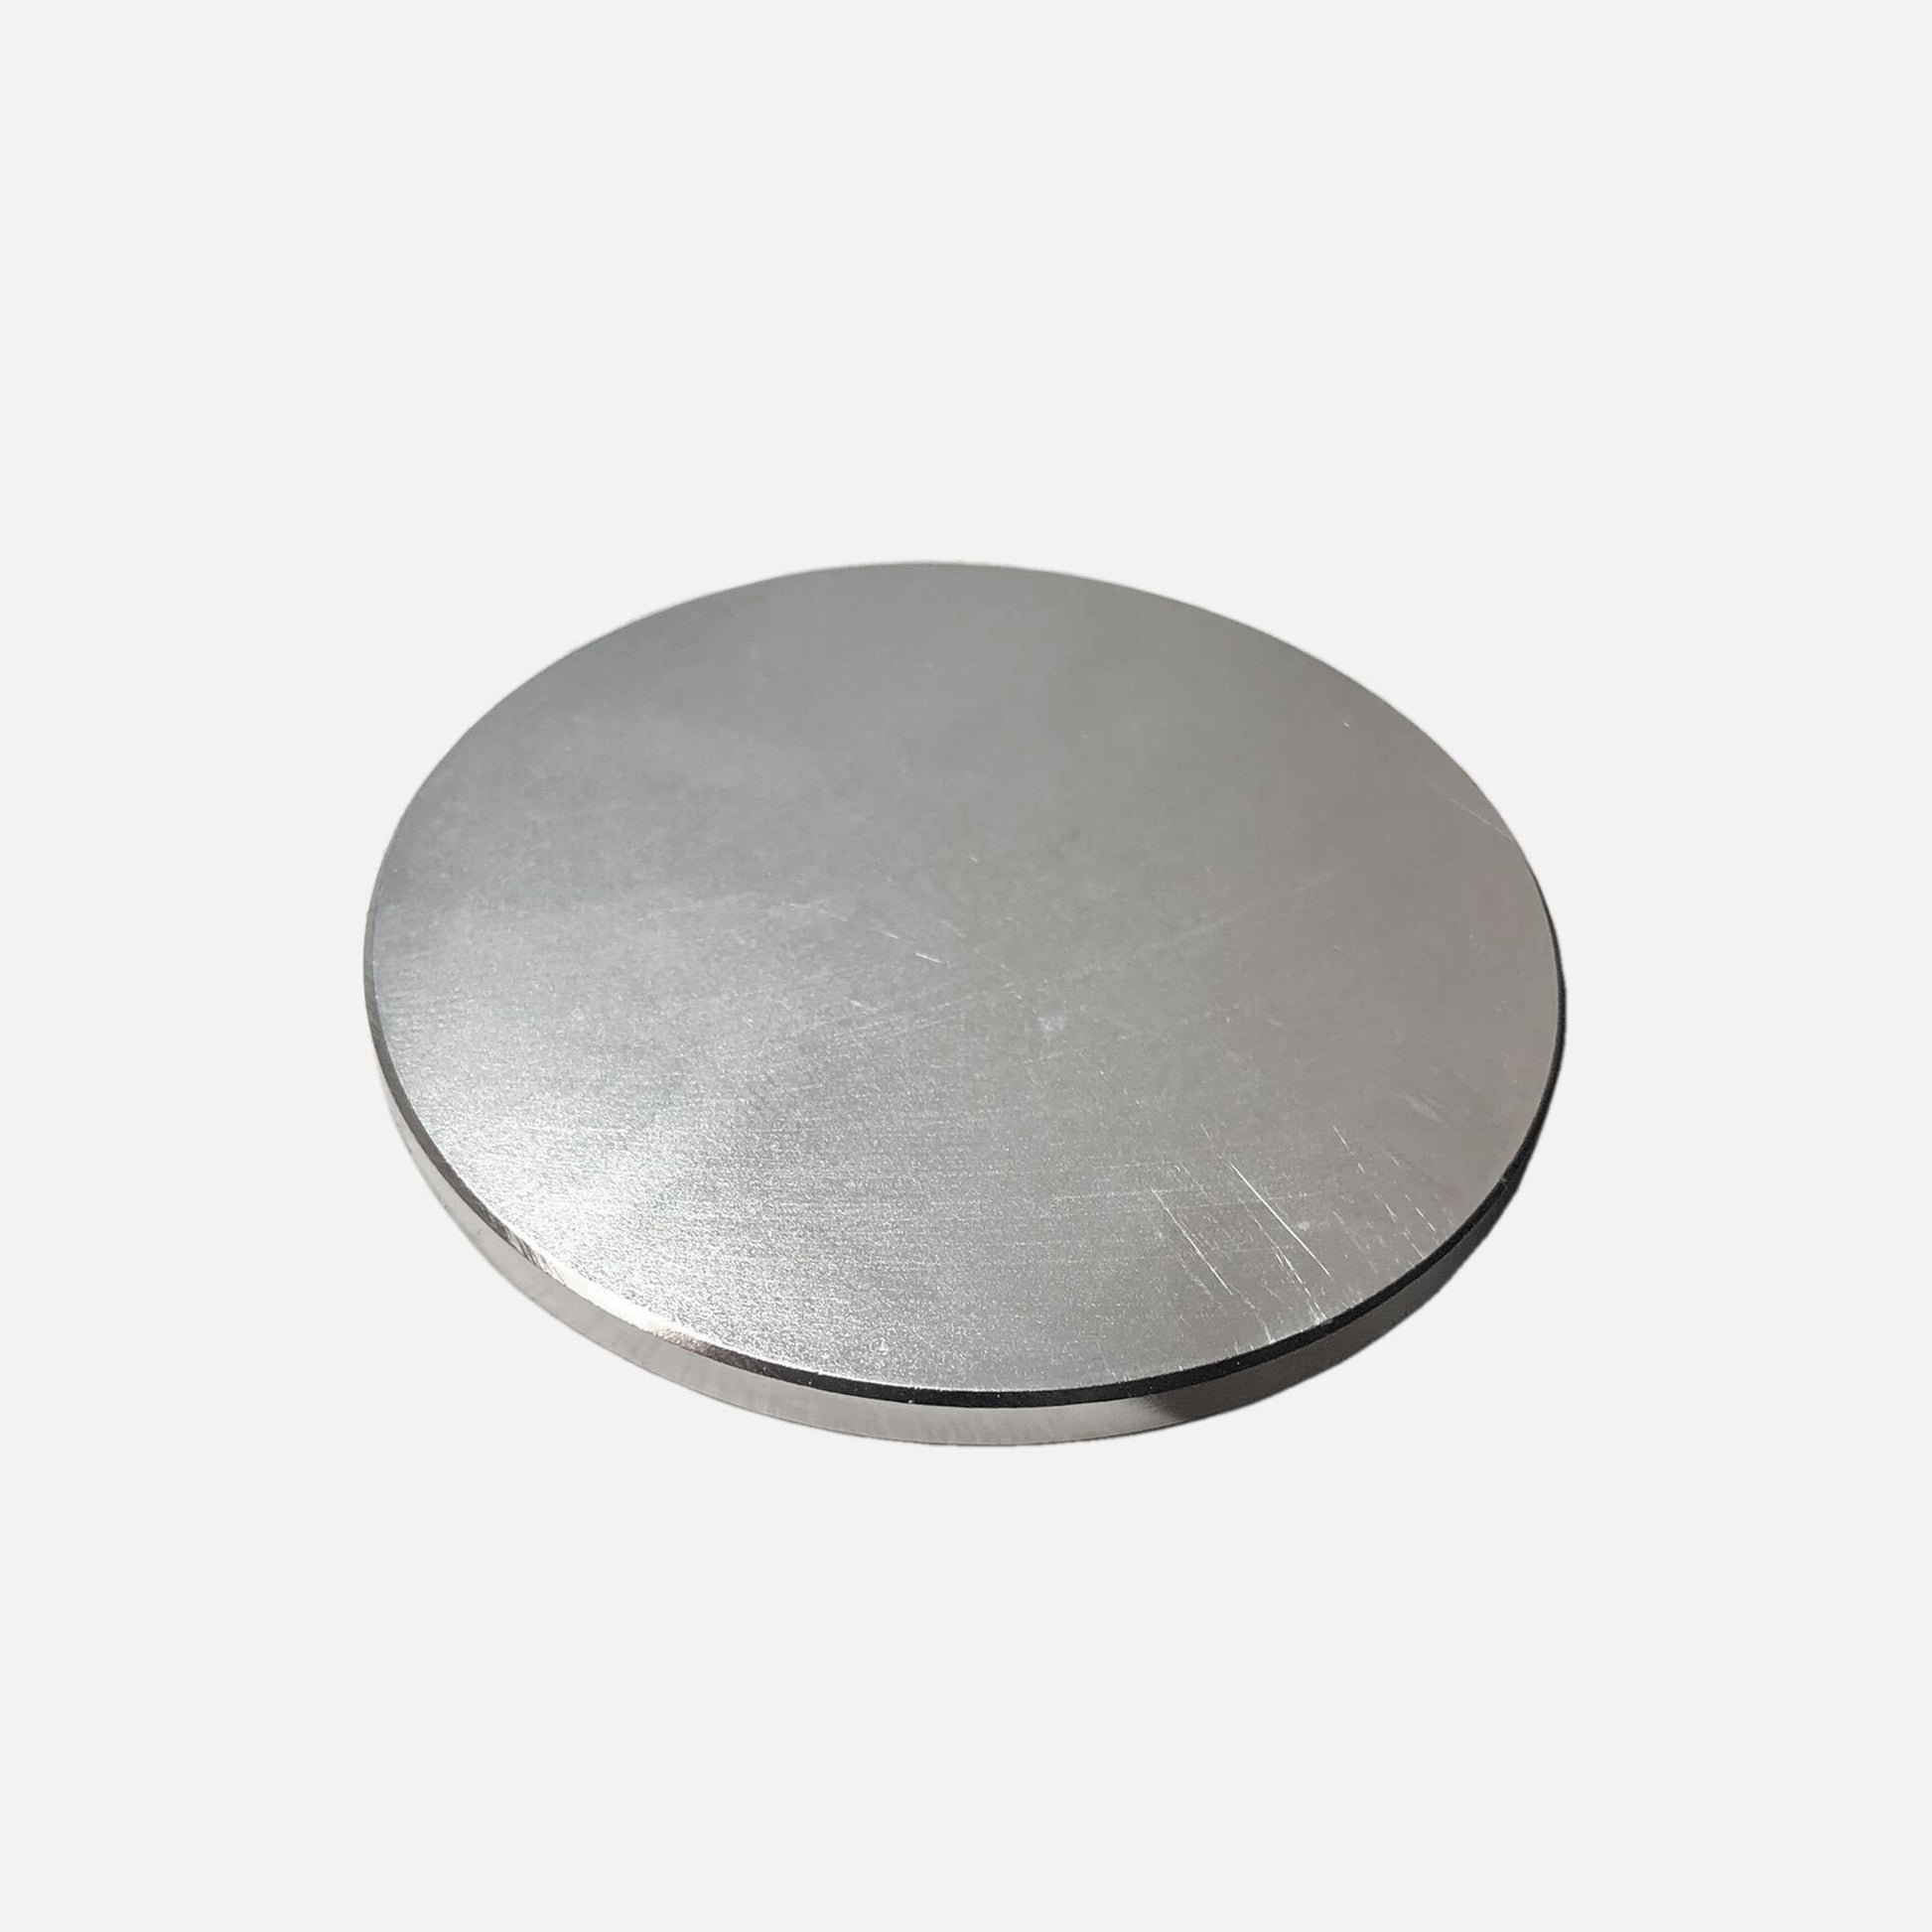 A circular industrial magnet